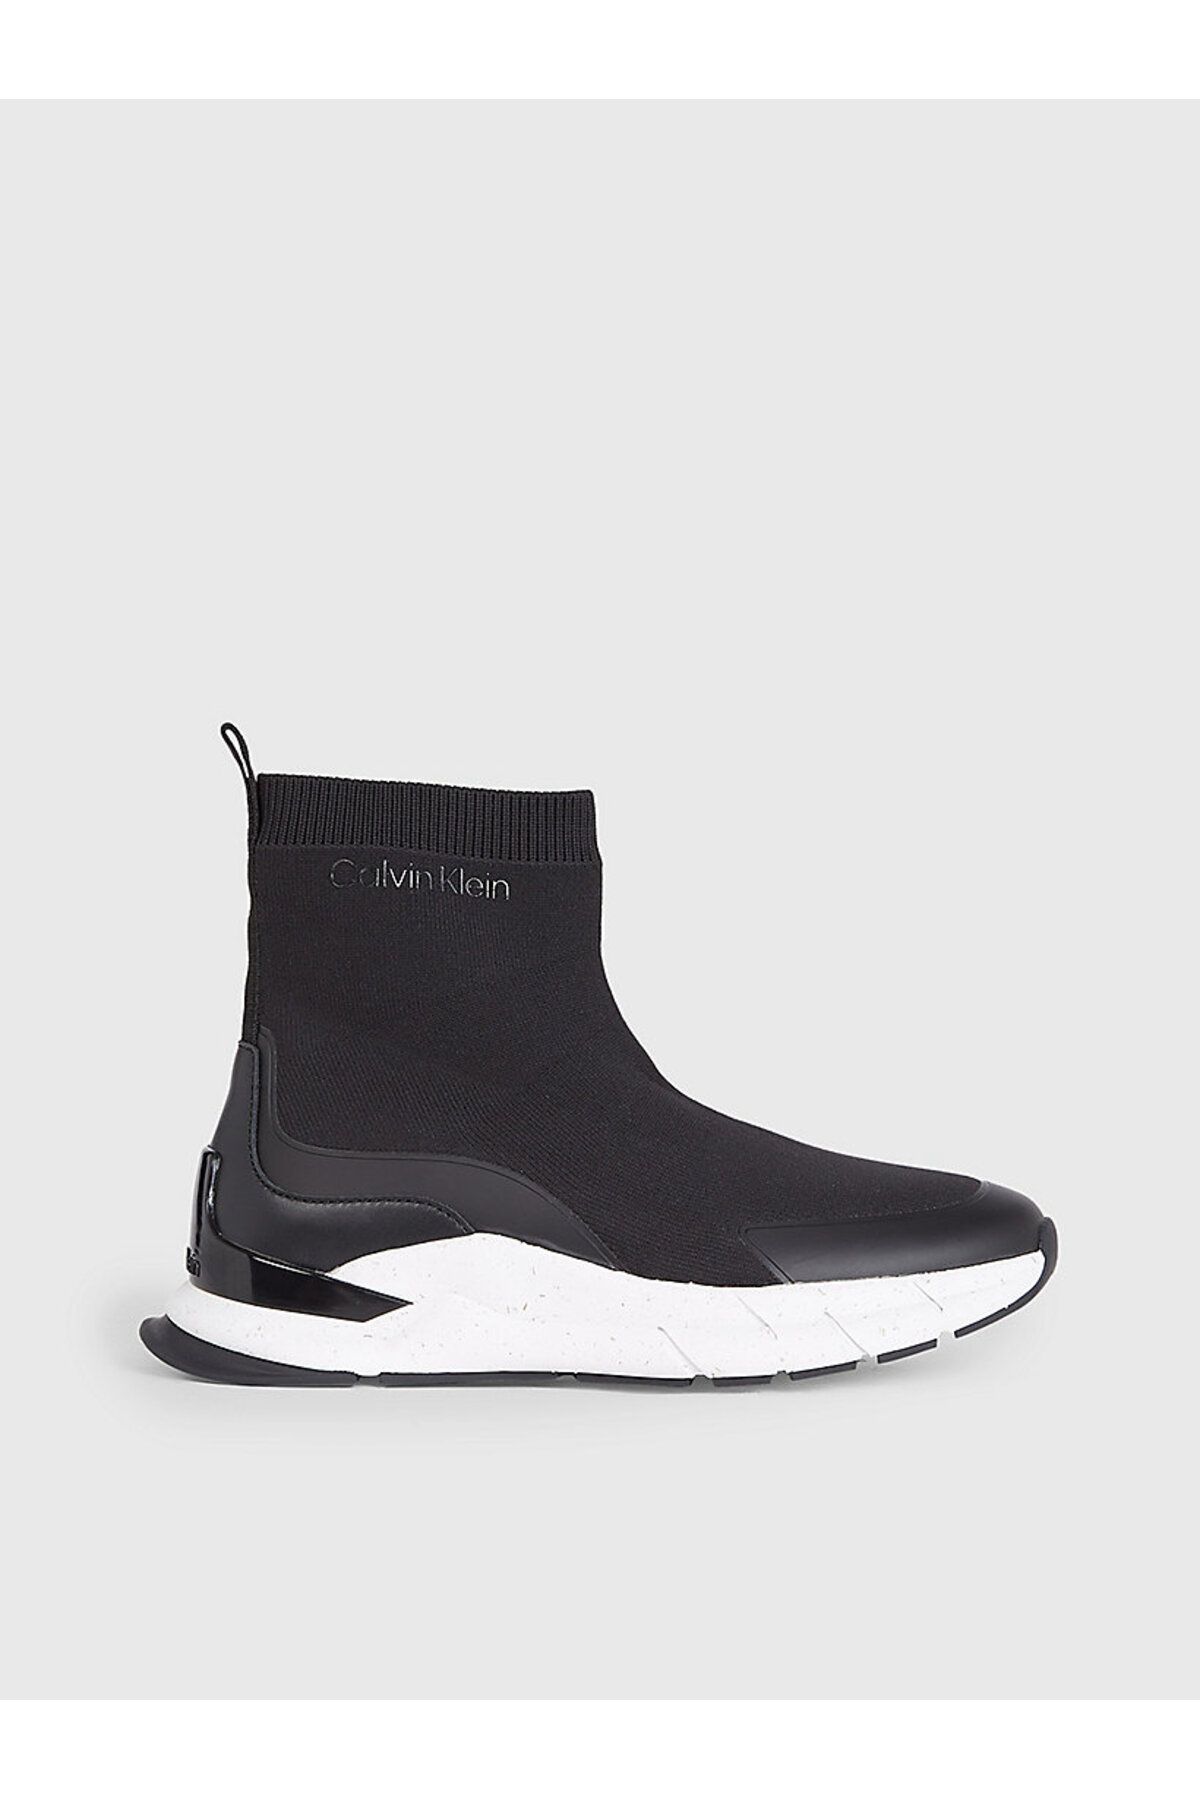 Calvin Klein Leggerissima Sock Boot